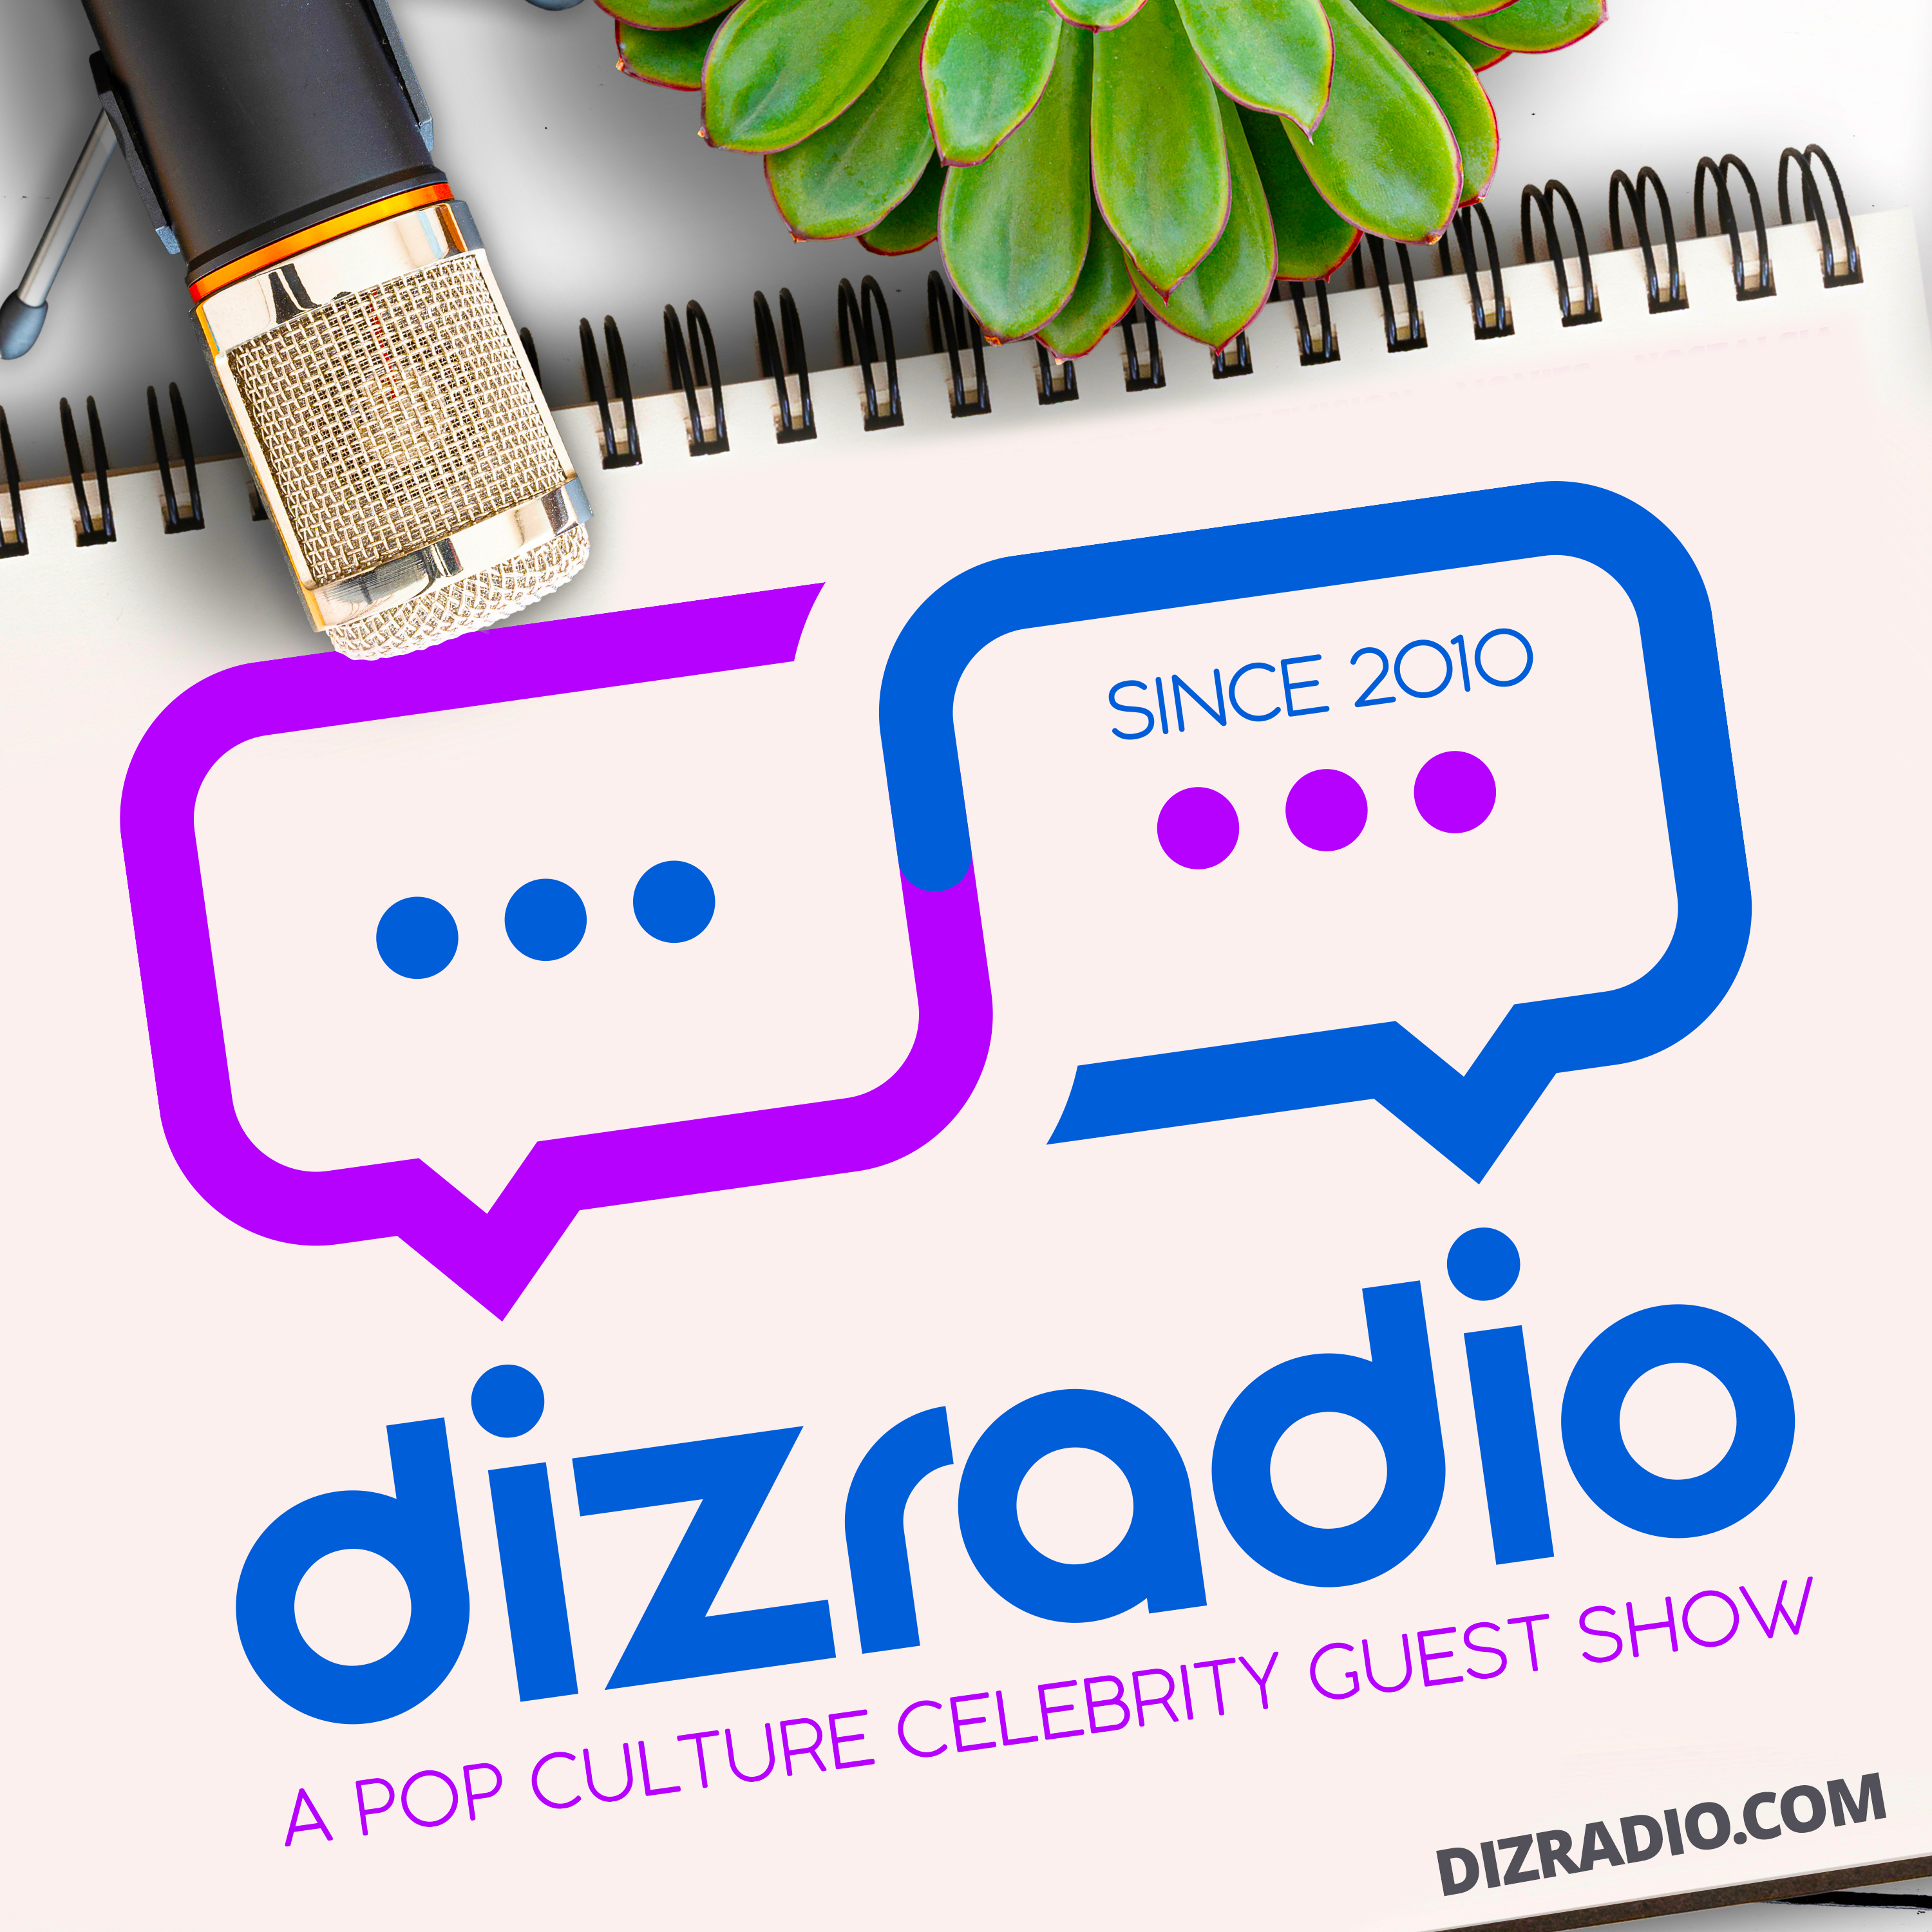 DisneyBlu’s “DizRadio” A Disney Themed Celebrity Guest Show